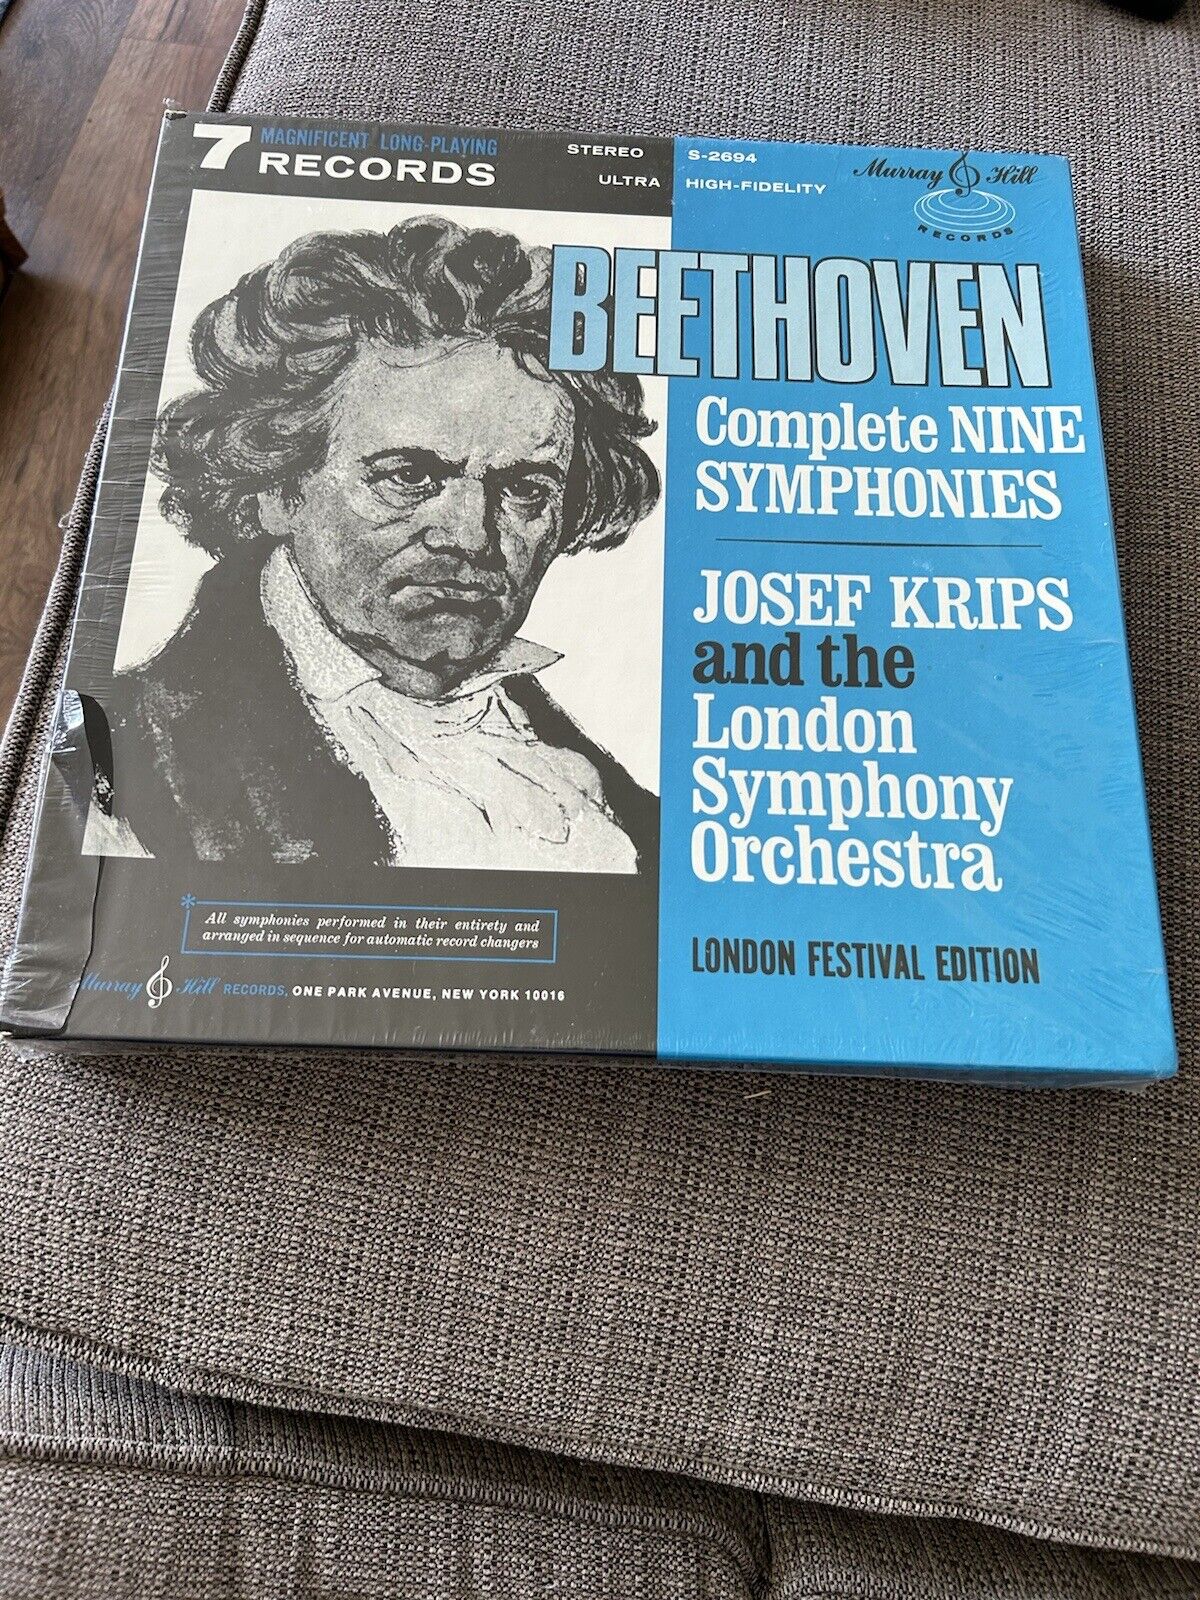 Beethoven - Complete Nine Symphonies - 7 Records - Josef Krips - London Festival